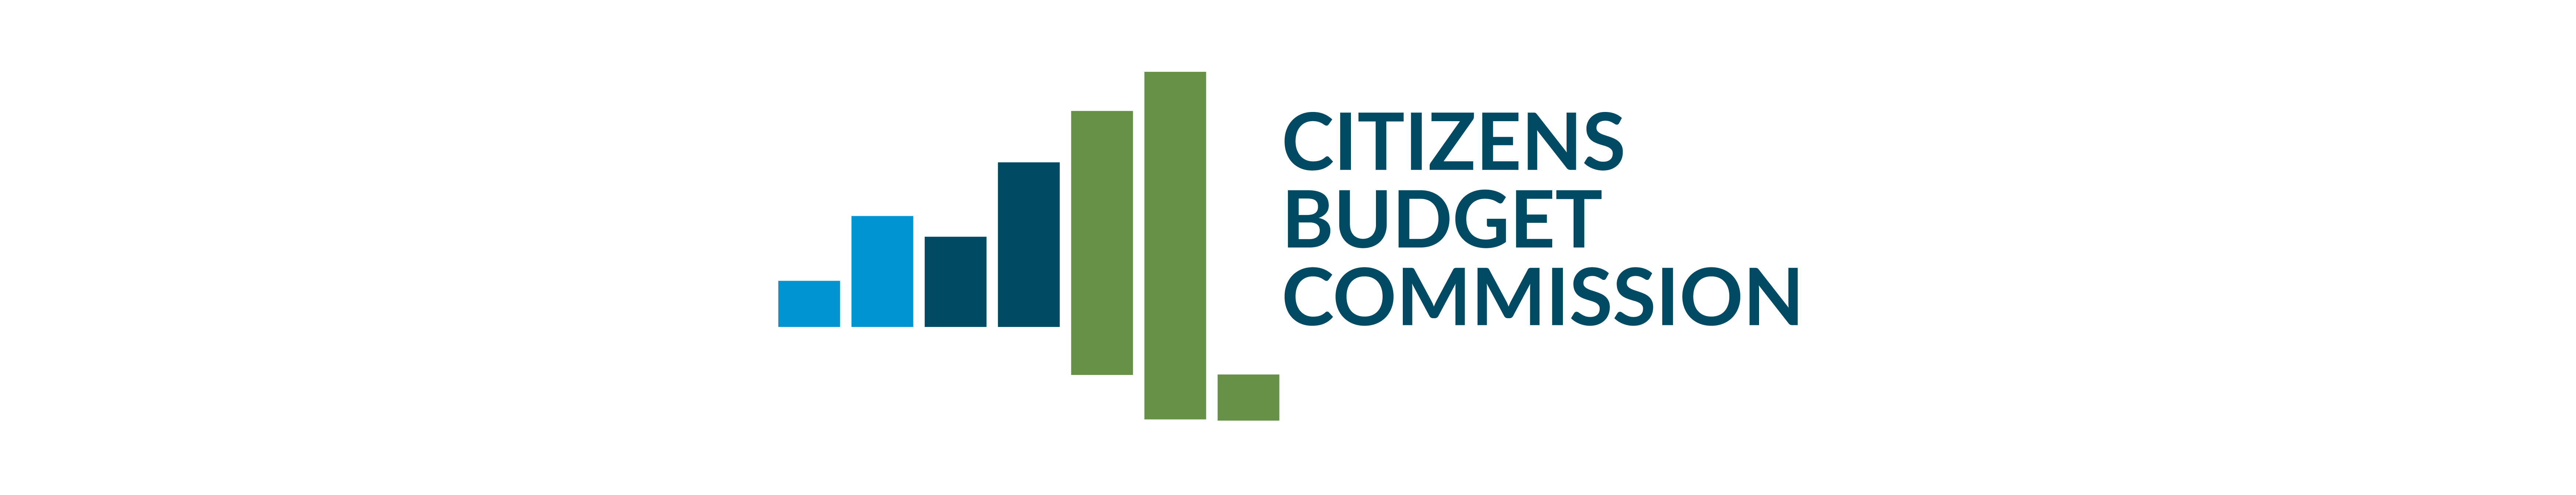 Citizens Budget Commission logo